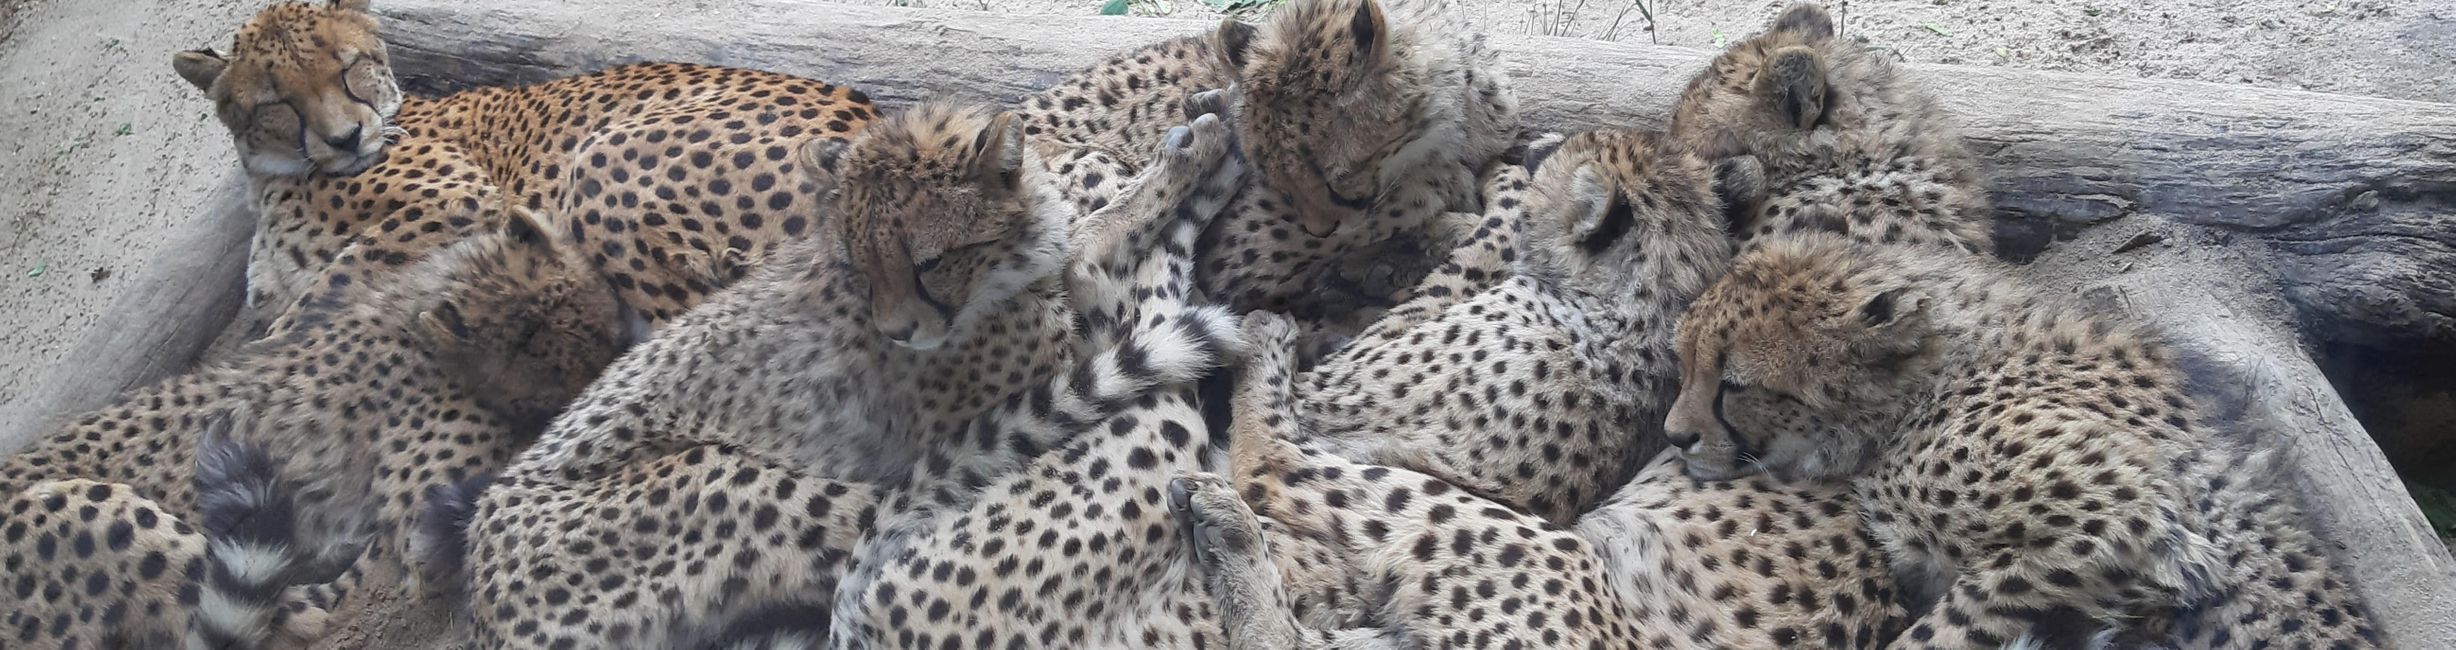 the seven(!) cutest cheetahs napping